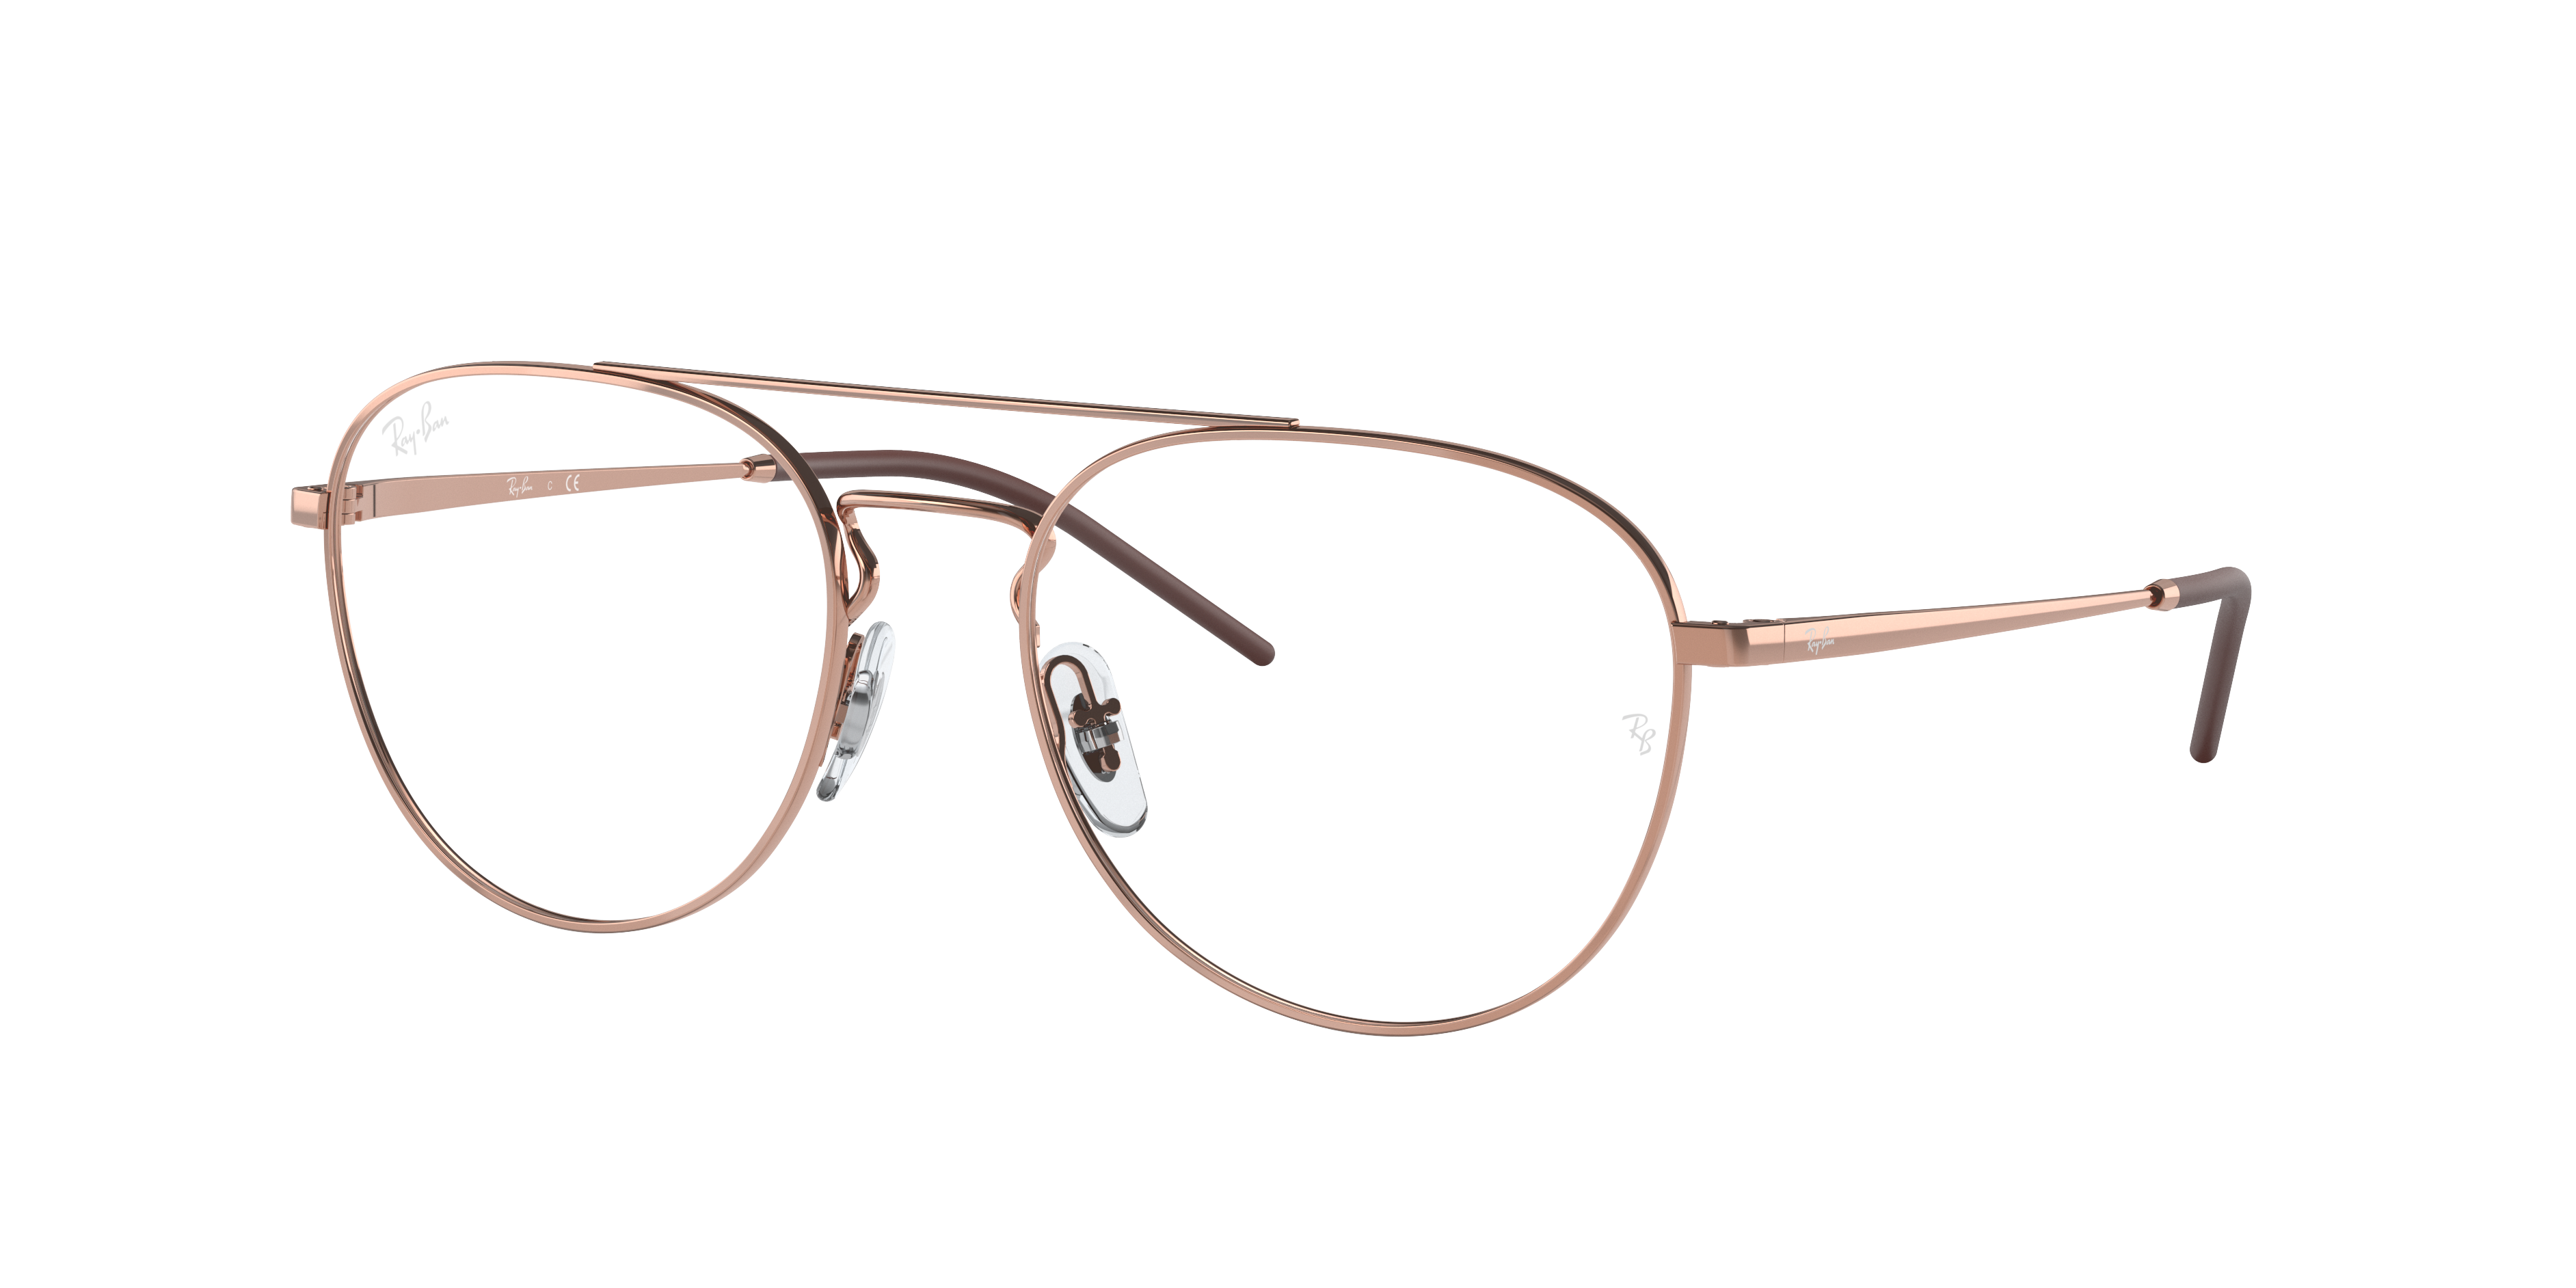 Rb6414 Optics Eyeglasses with Rose Gold Frame | Ray-Ban®